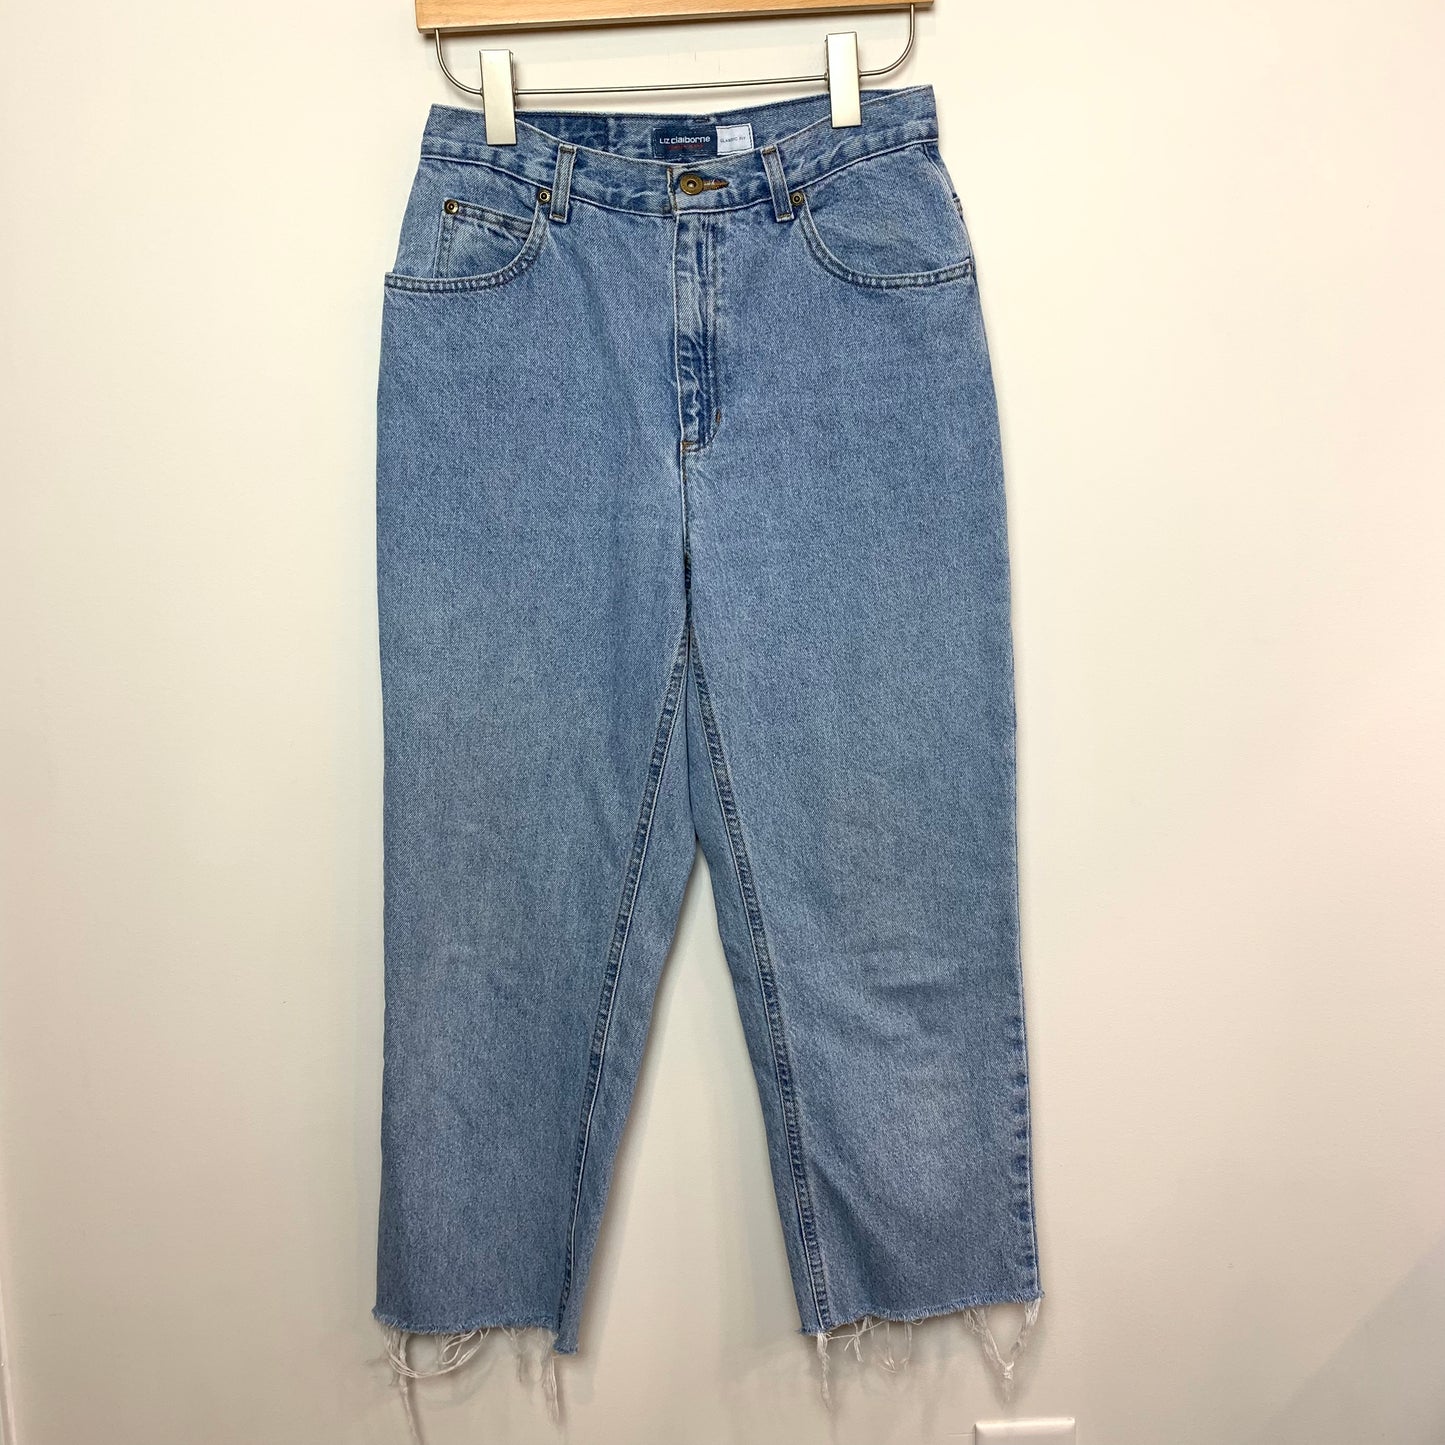 Vintage 90s Liz Claiborne High Rise Straight Leg Jeans Denim Cropped Raw Hem 8